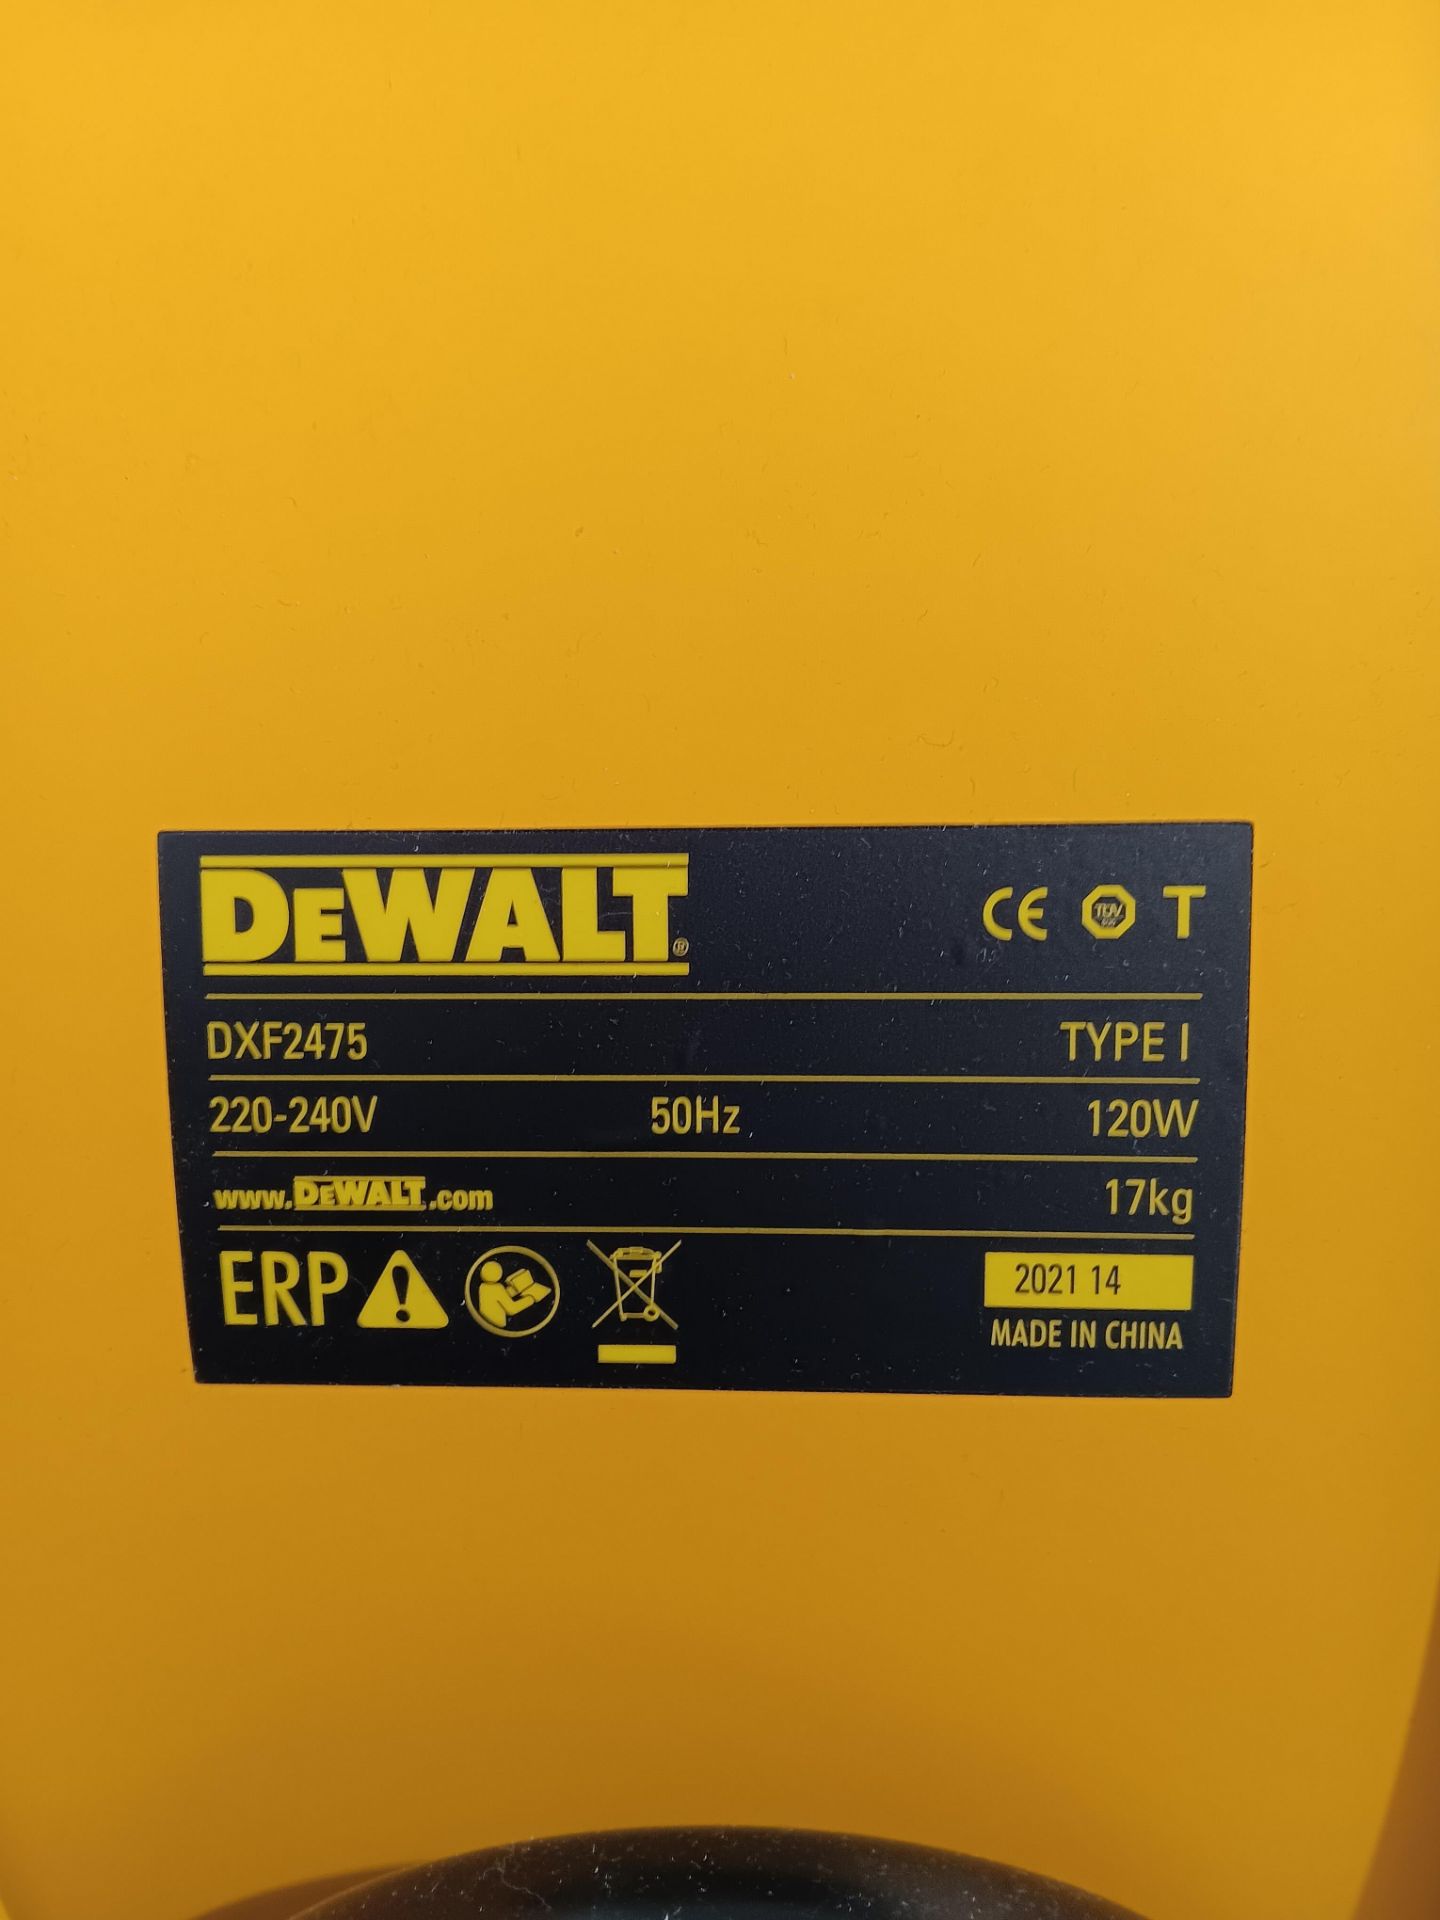 DeWalt DXF2475 Industrial Floor Drum FaN - Image 2 of 2